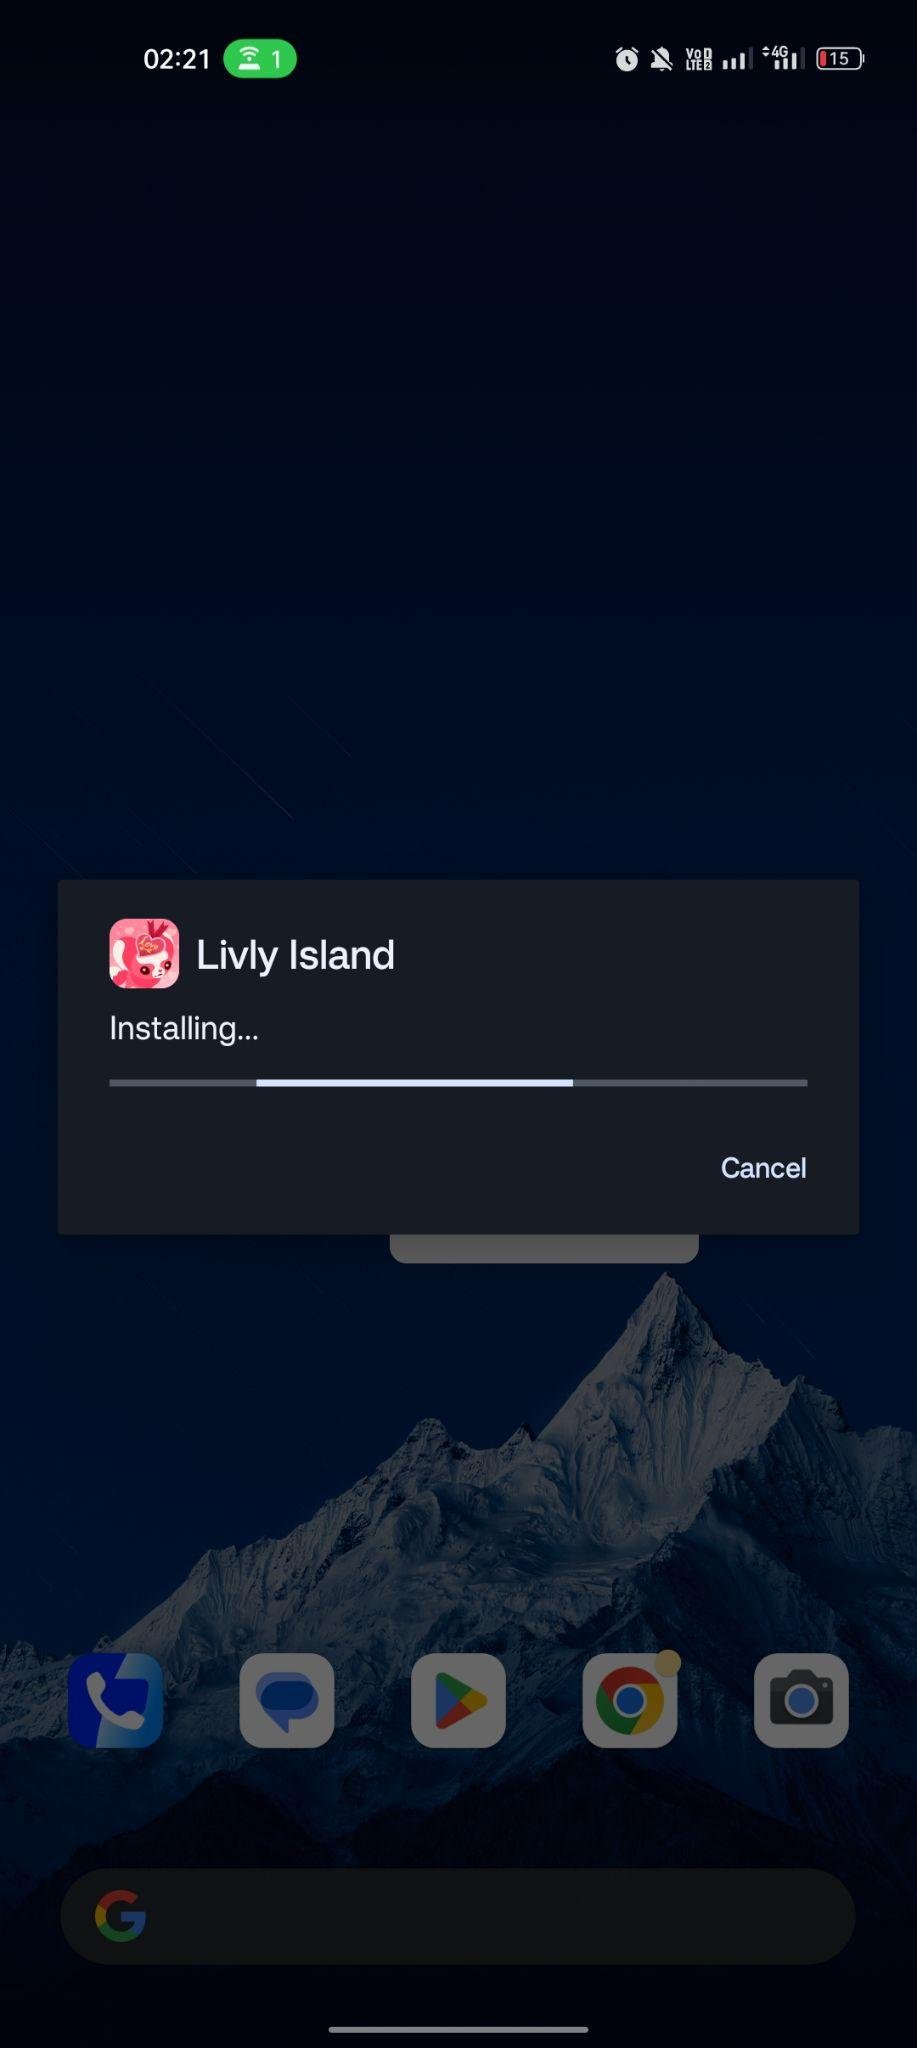 Livly Island apk installing